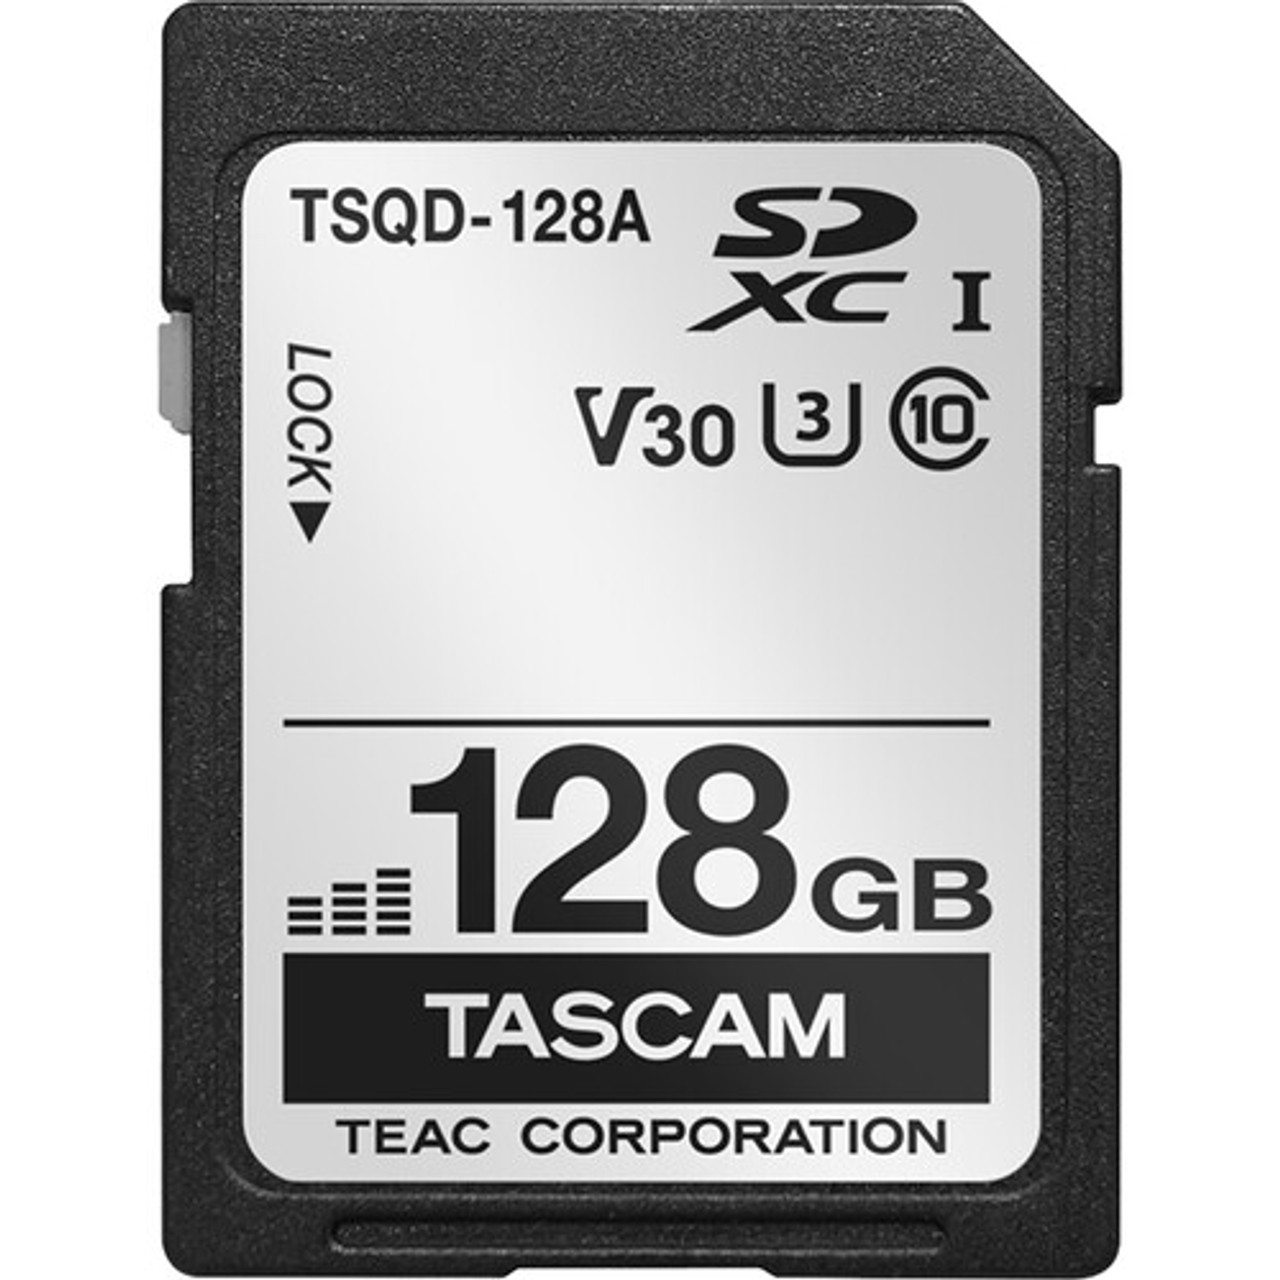 Tascam TSQD-128A 128GB UHS-I SDXC Memory Card (TSQD-128A)